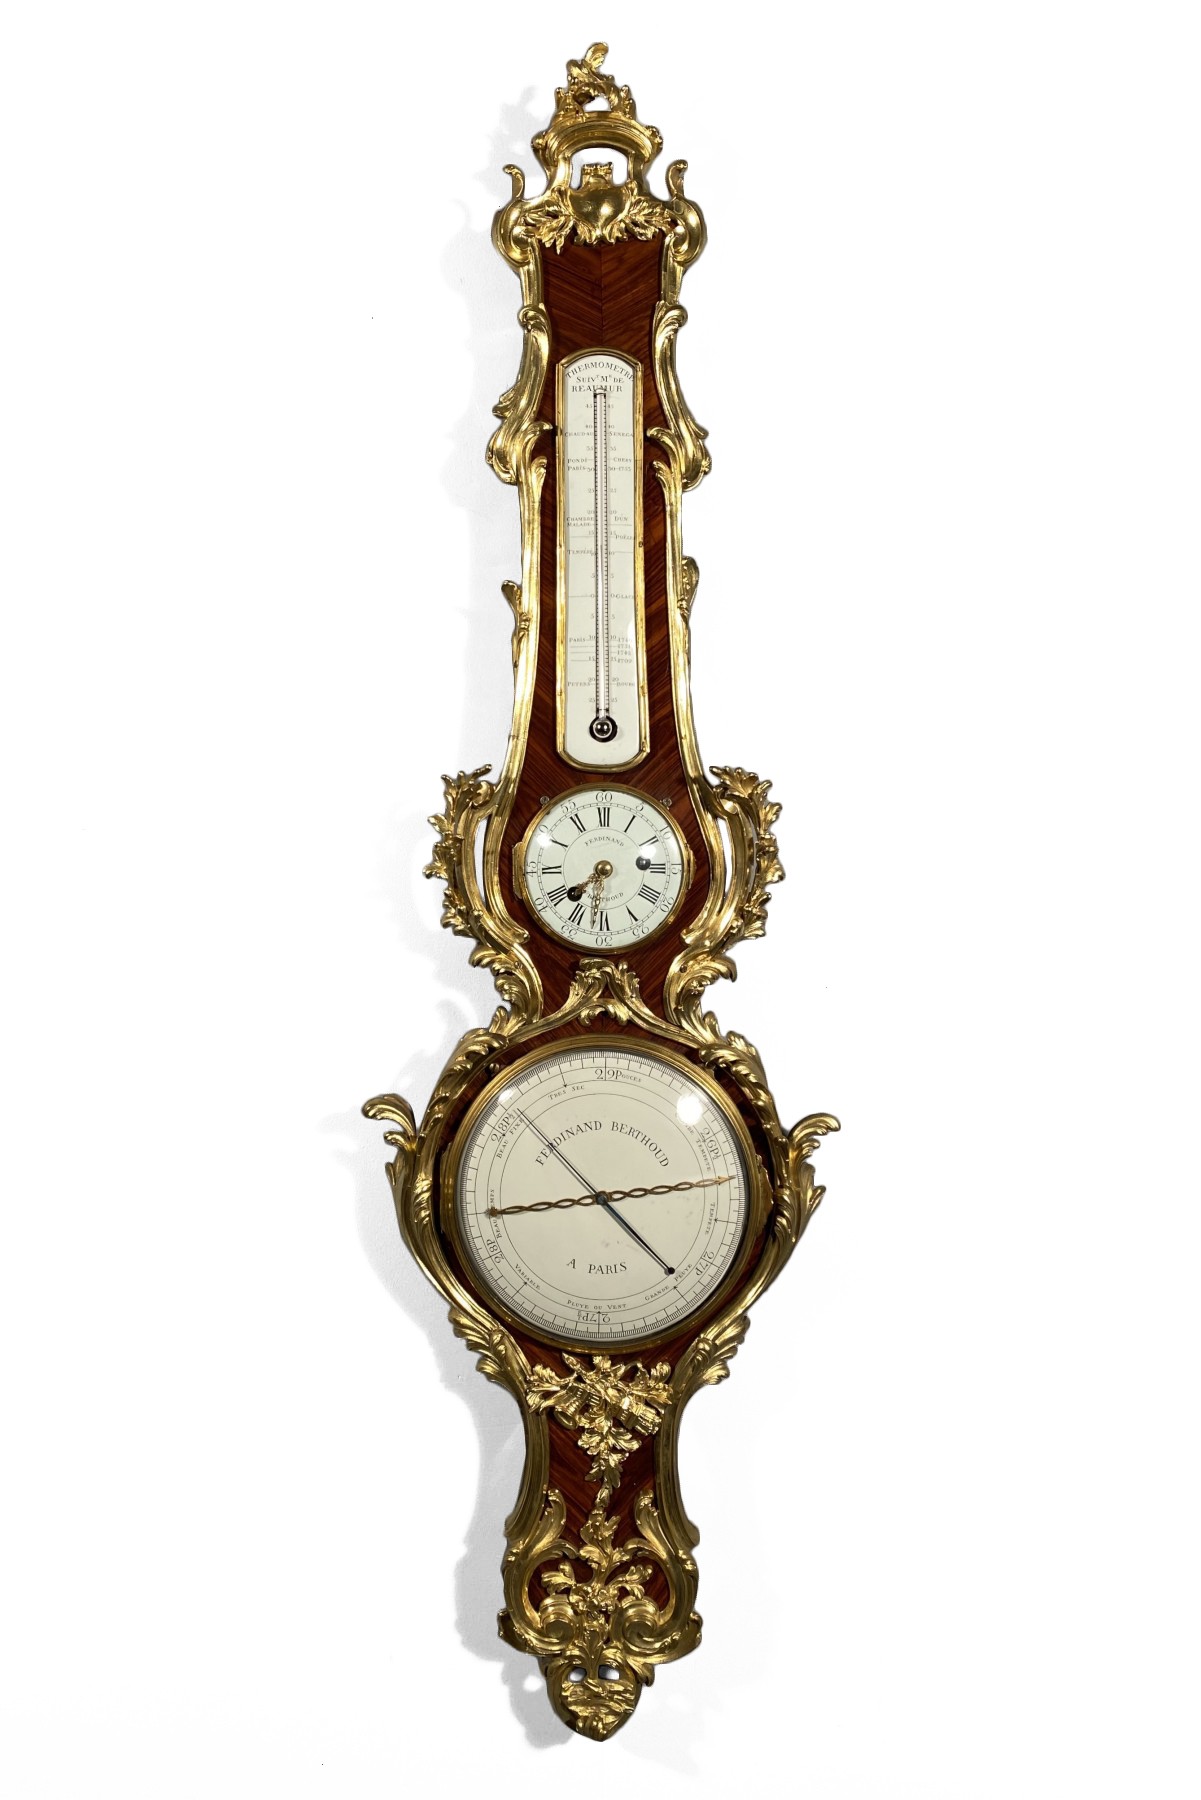 Clock making Barometer Made in France. 